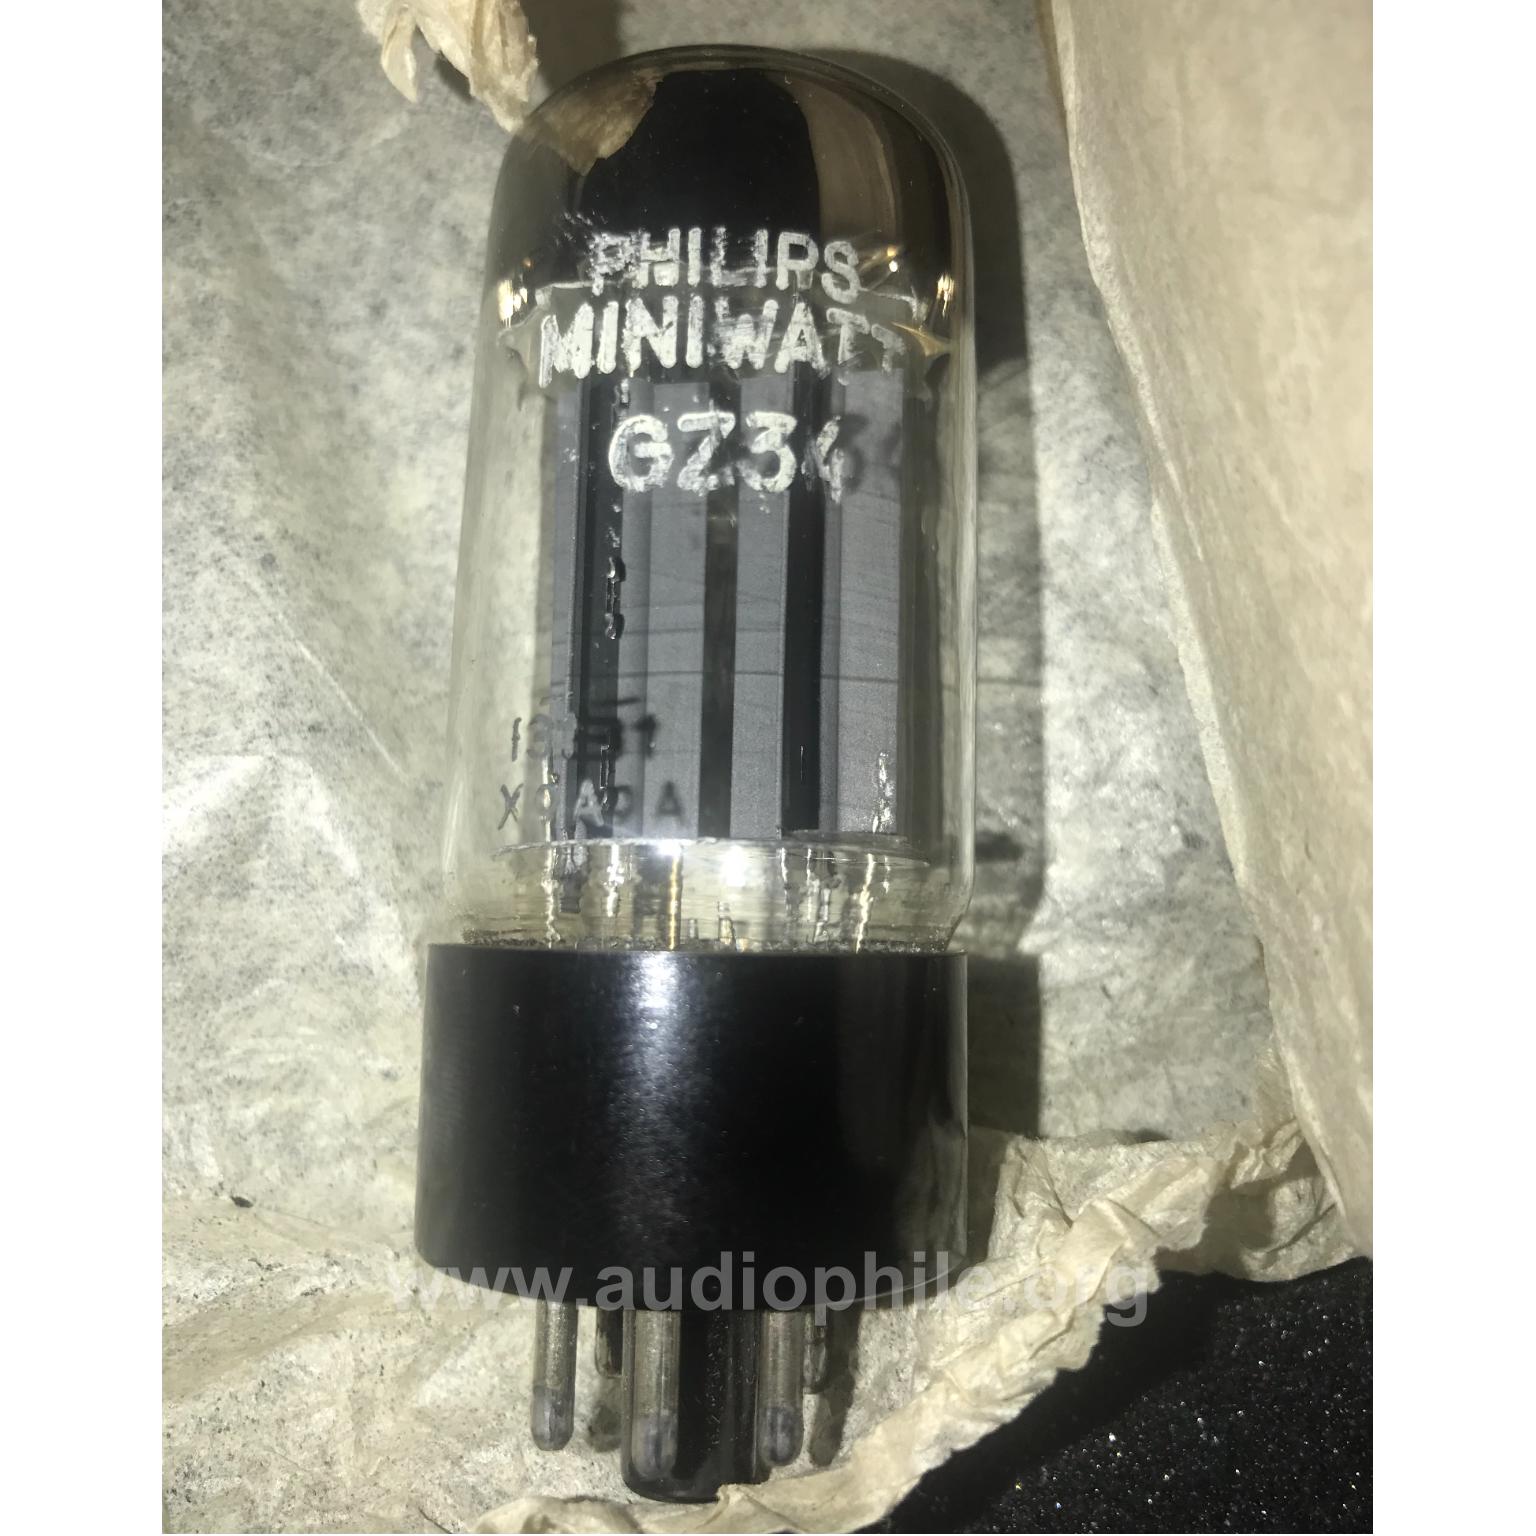 Philips miniwatt gz34 / 5ar4